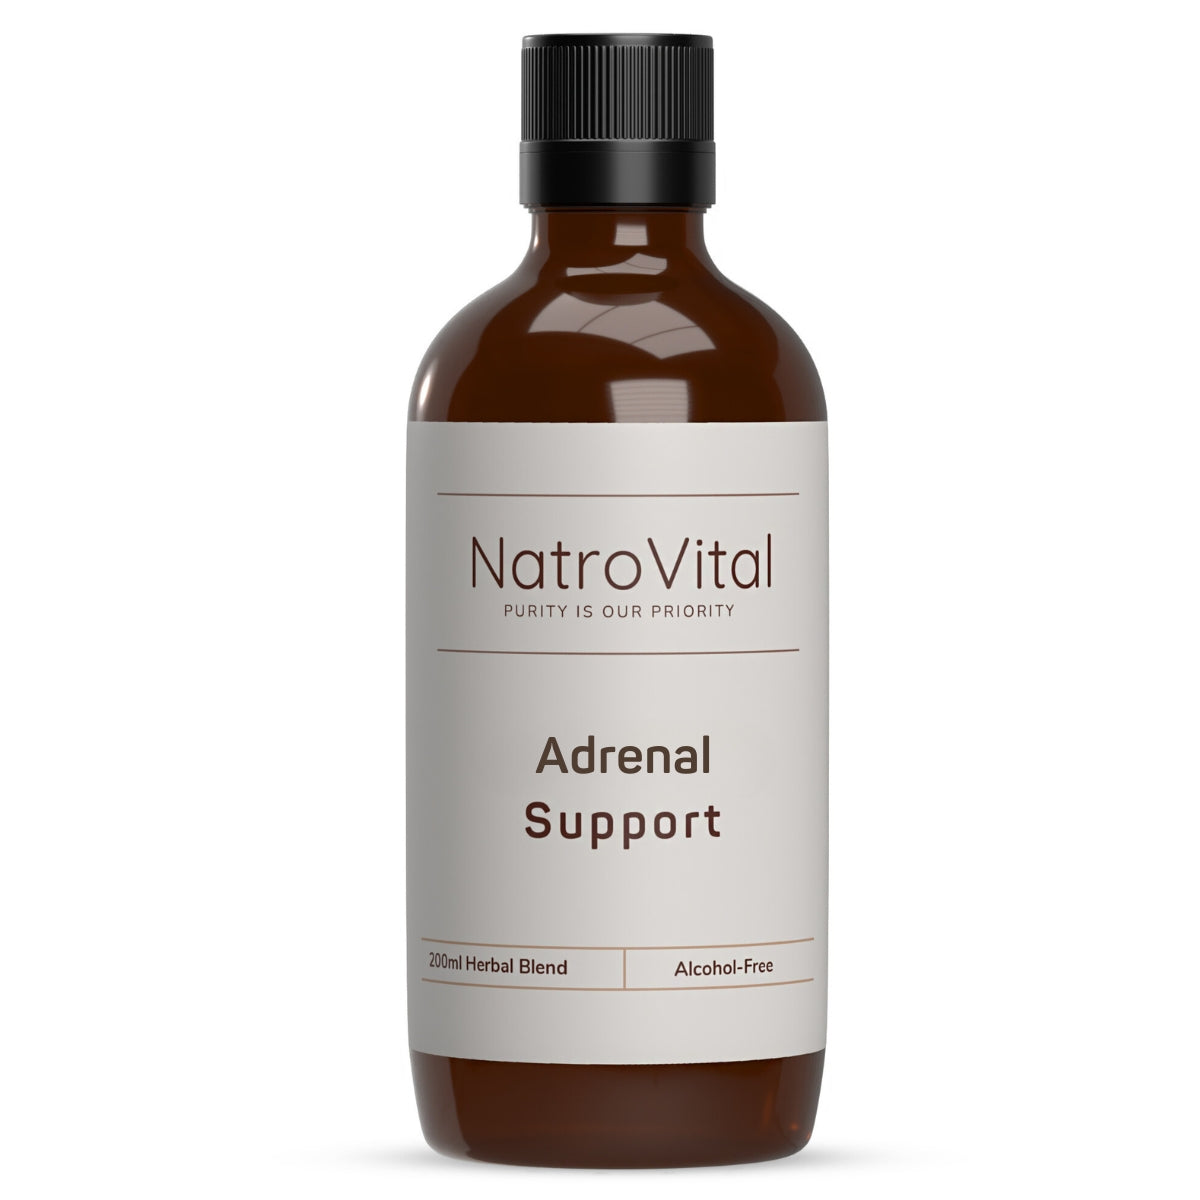 NatroVital Adrenal Support